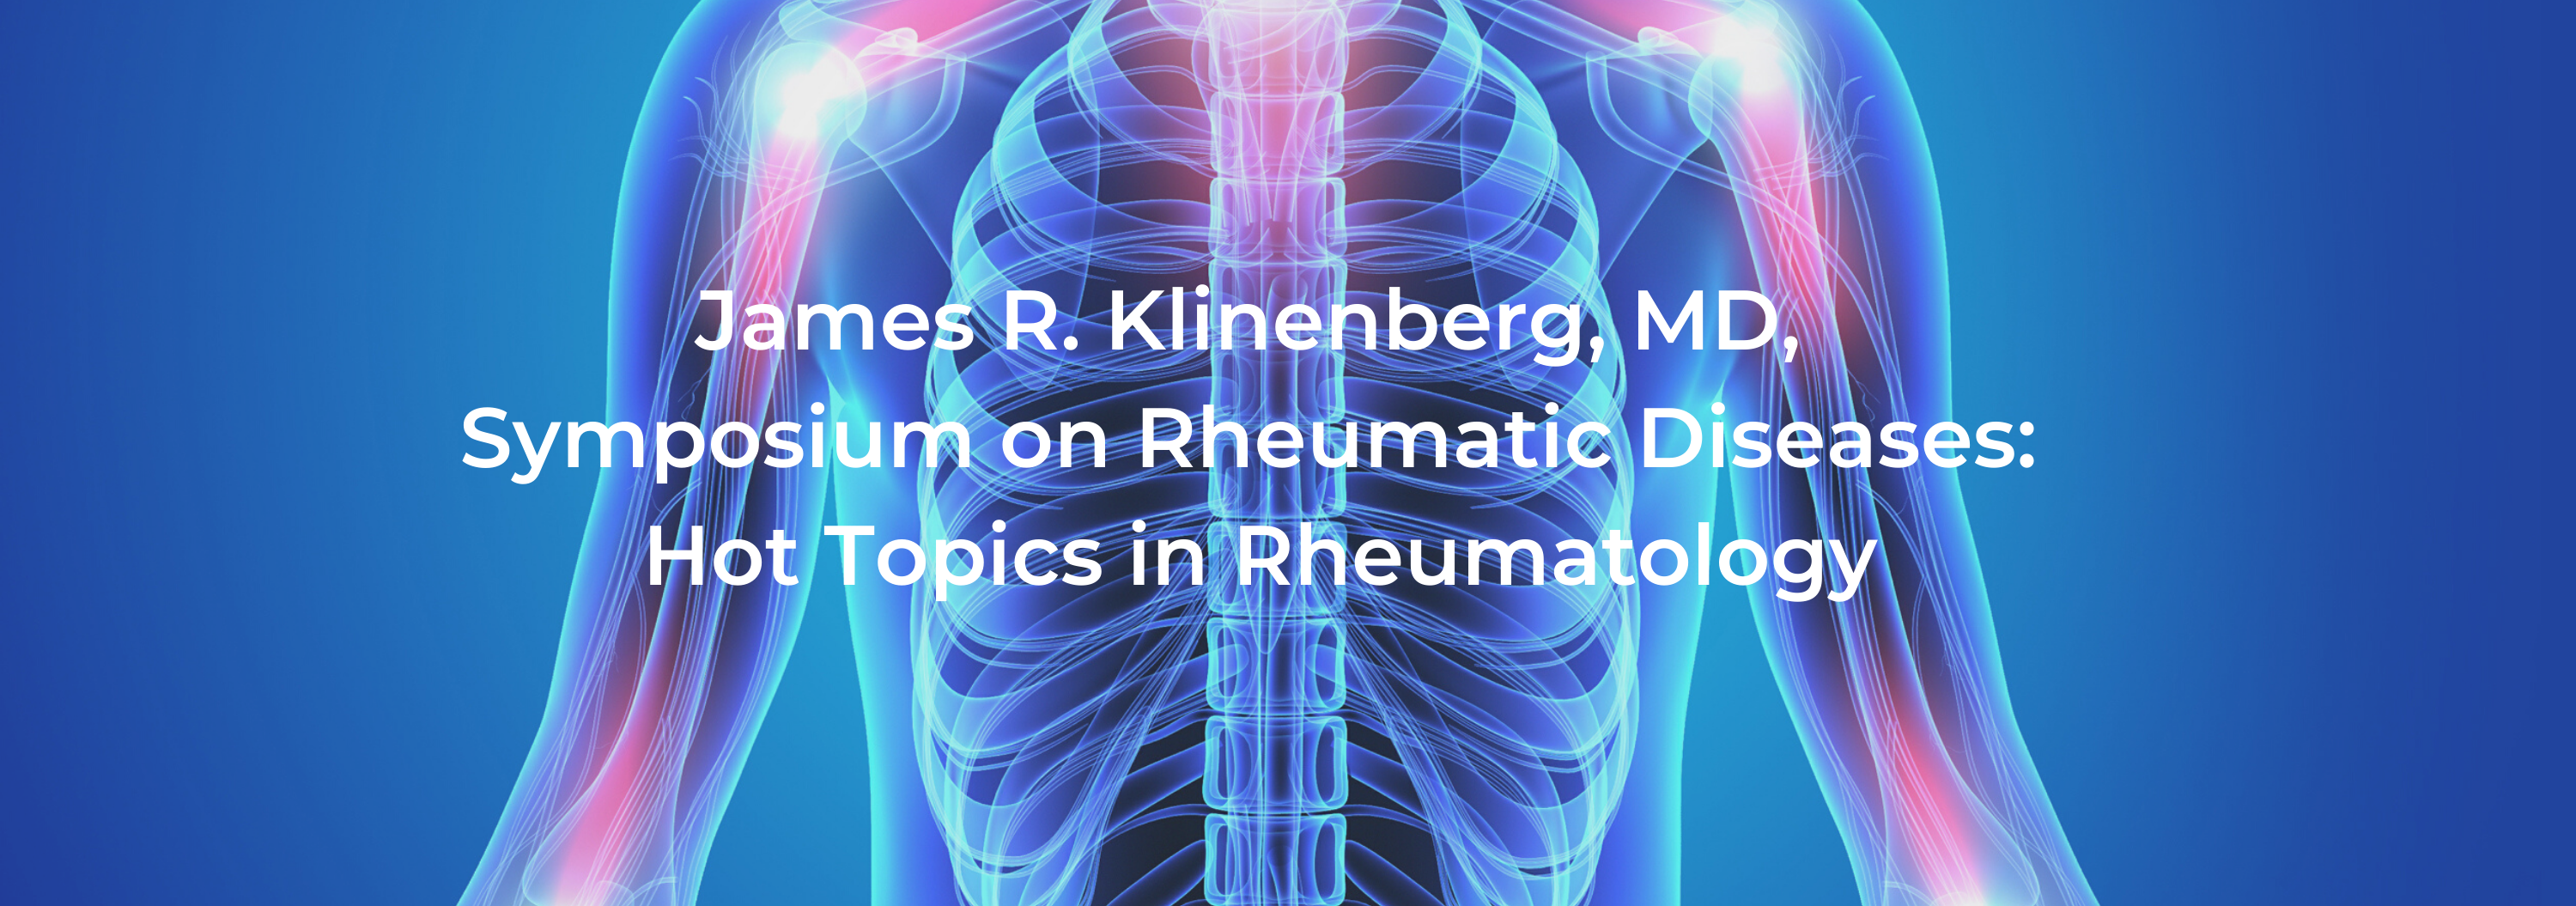 2020 James R. Klinenberg, MD, Symposium on Rheumatic Diseases: Hot Topics in Rheumatology Banner